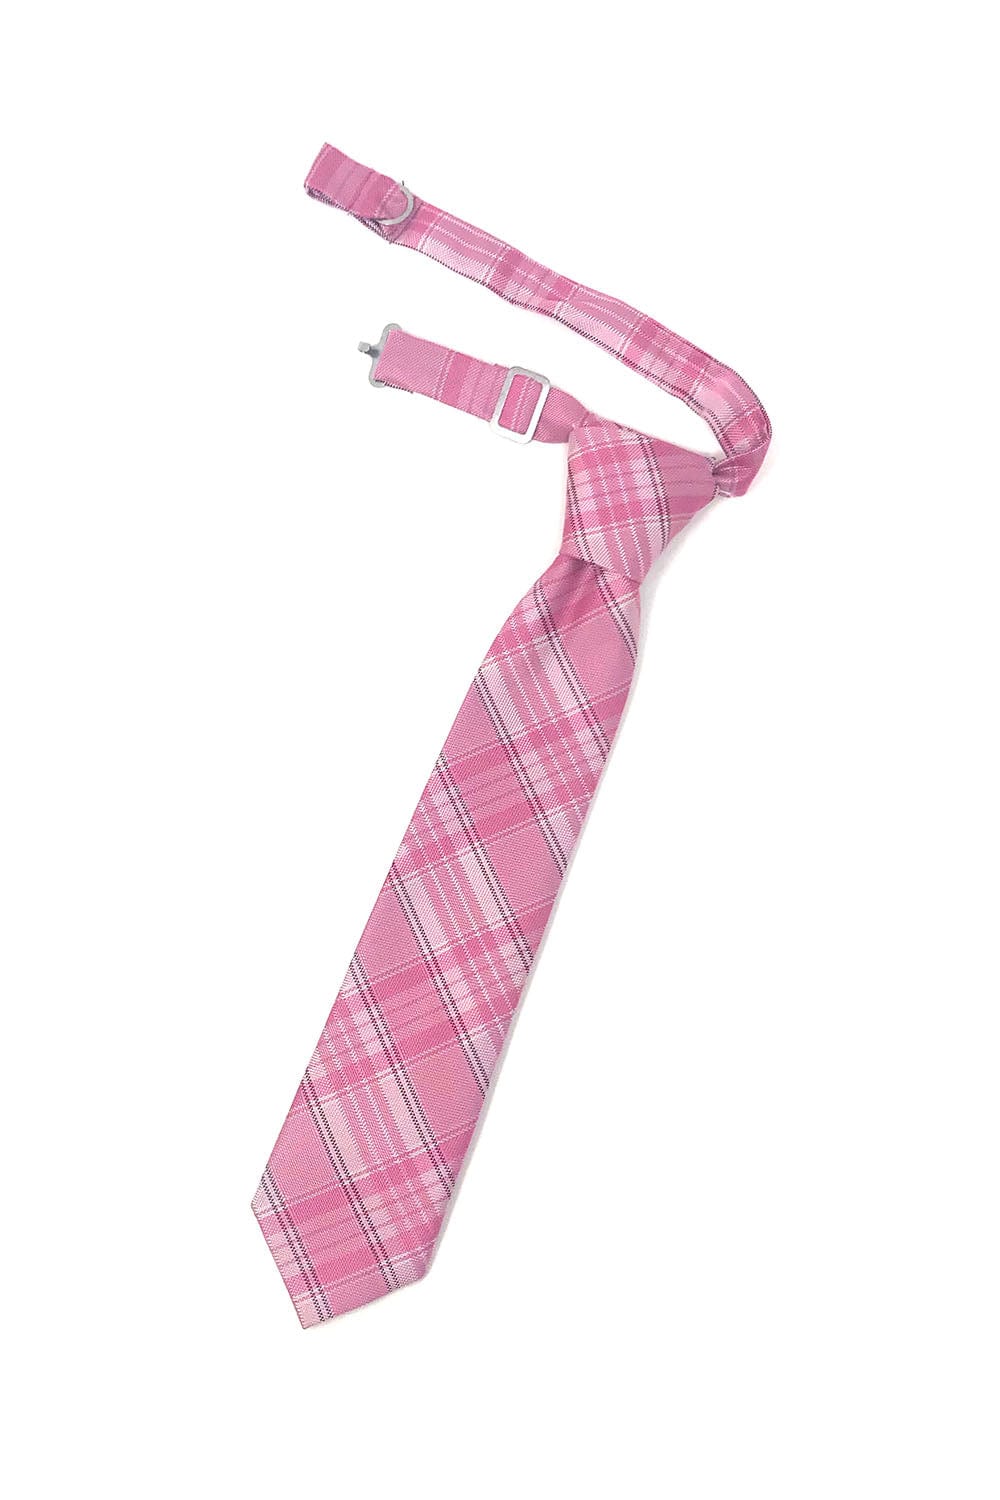 Cardi Pre-Tied Pink Madison Plaid Kids Necktie